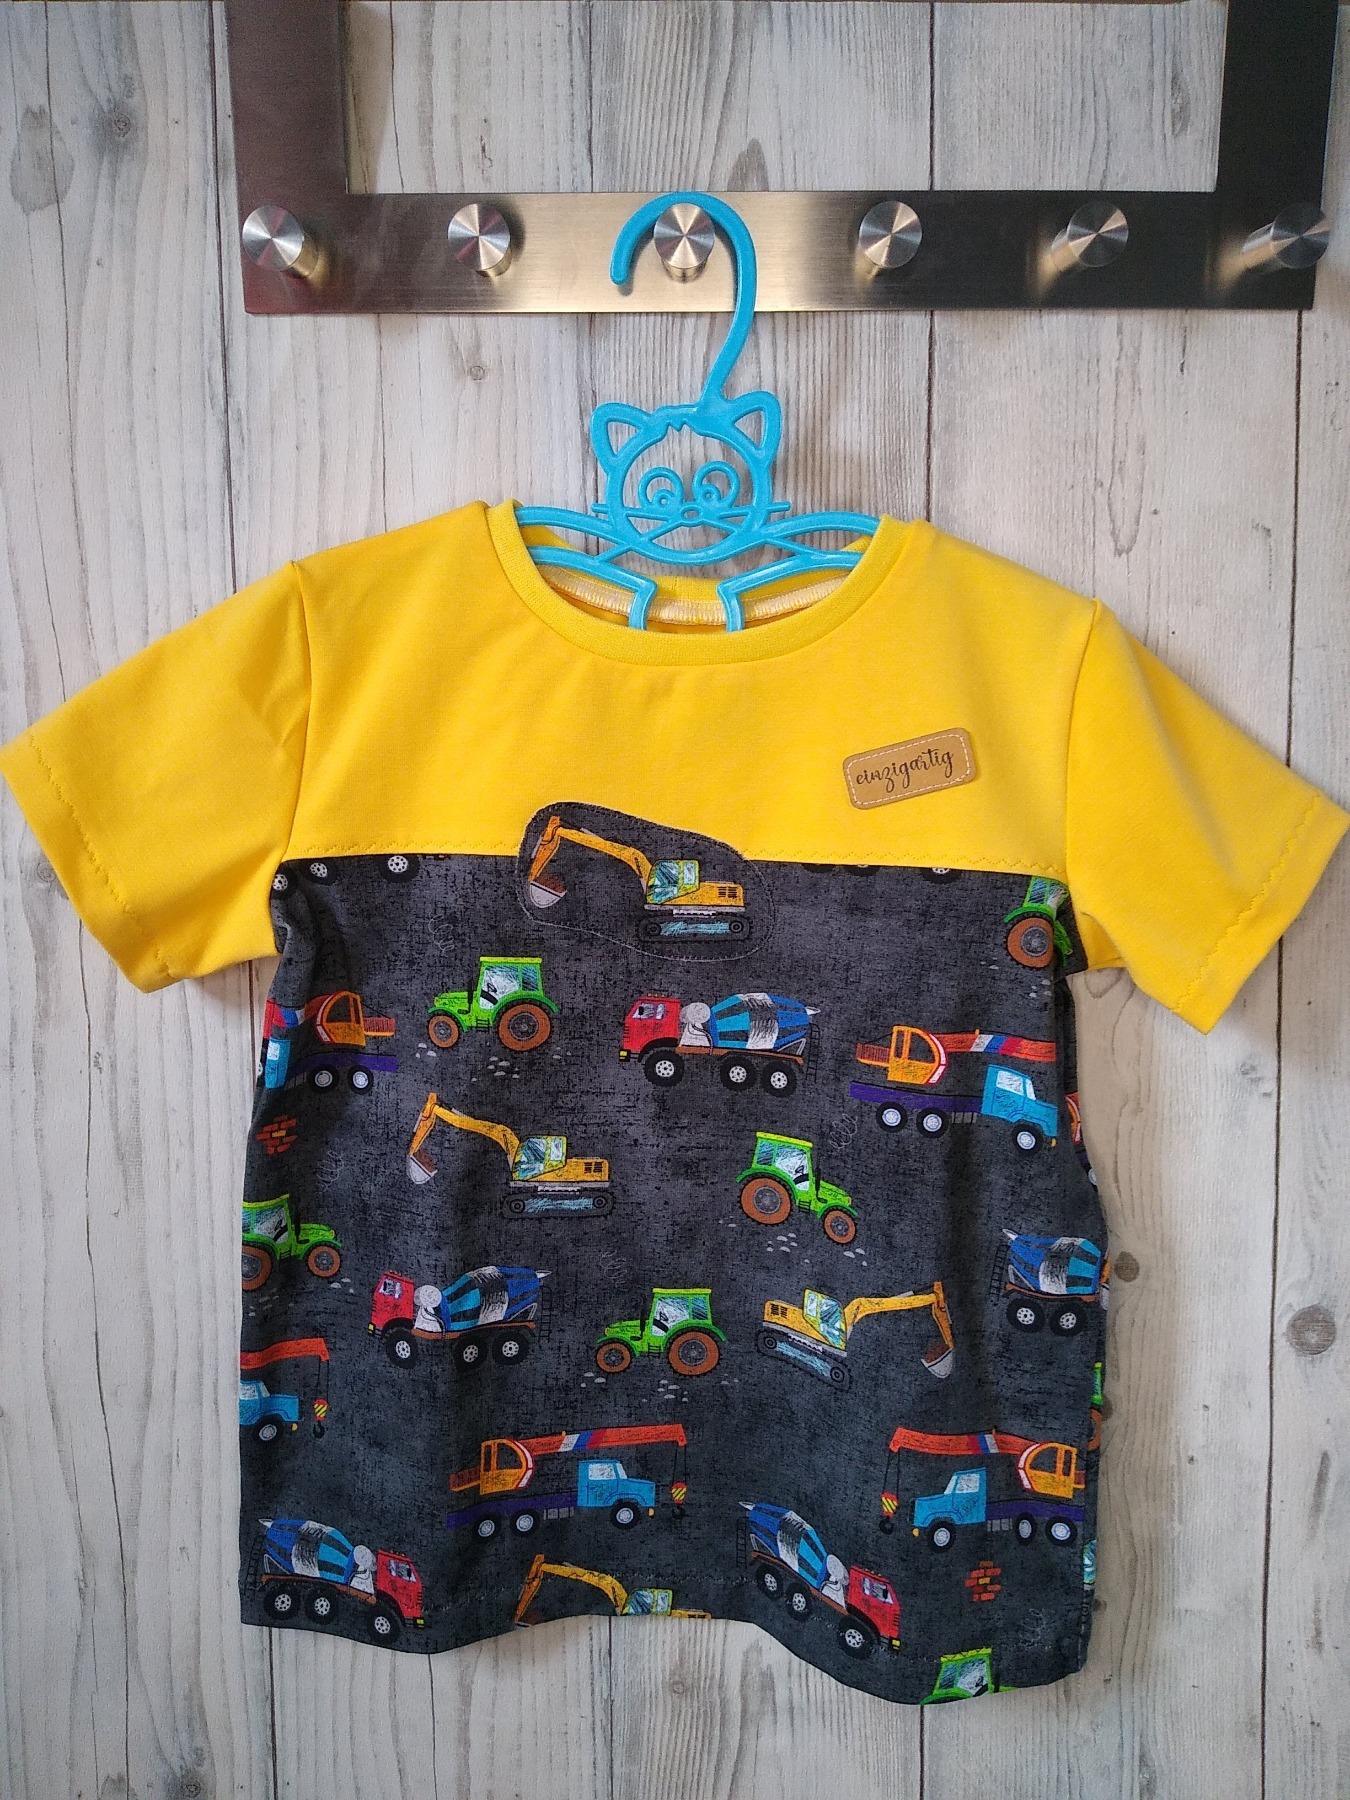 Sofortkauf Handmade T-Shirt Baufahrzeuge Jeanslook Anthrazit/Gelb Gr 104 Sisis Nähträume